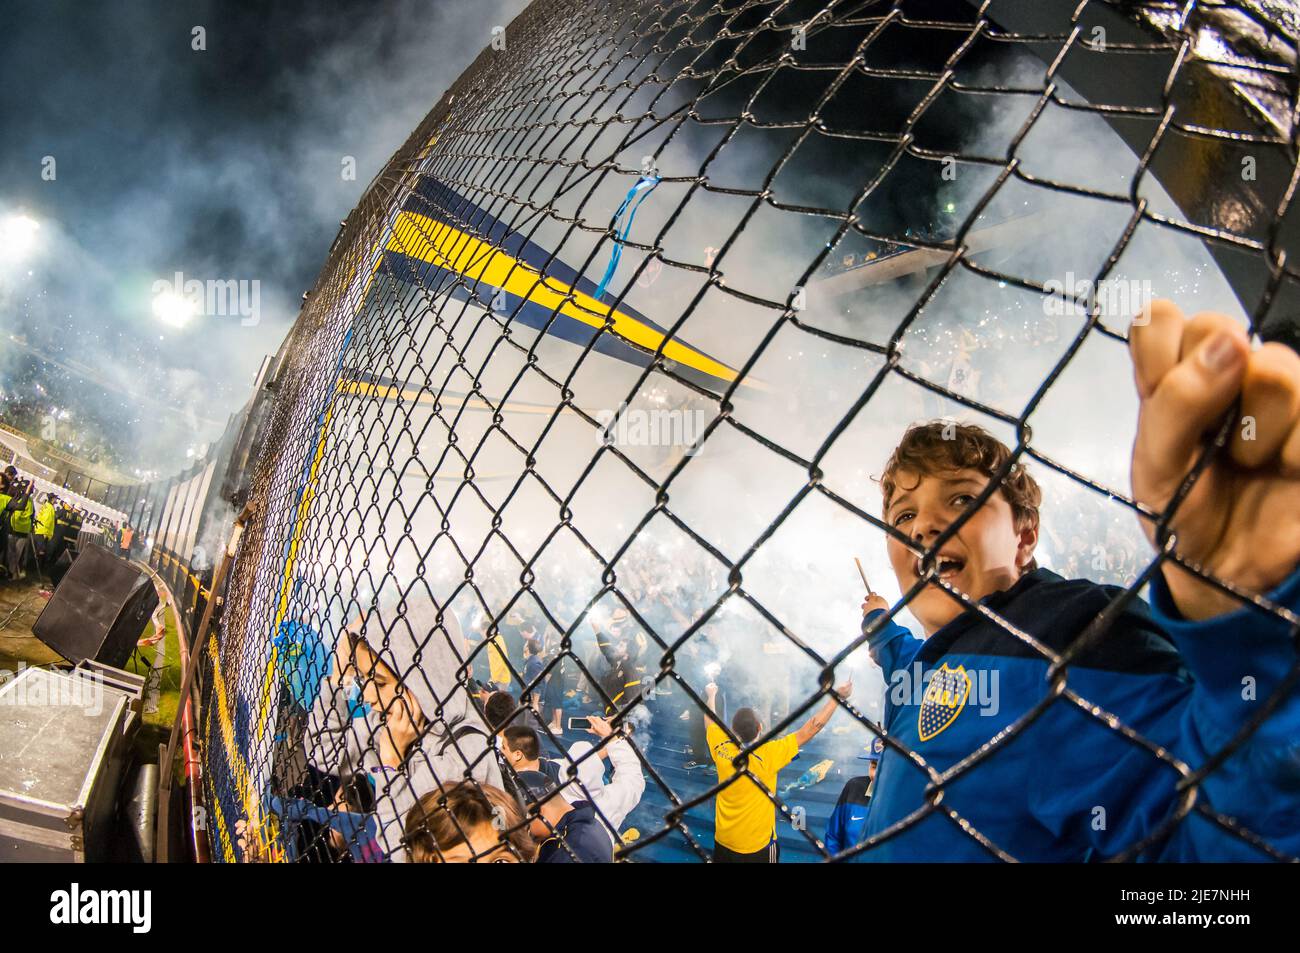 Boy holding stick of fireworks to receive the home team Boca Juniors at La Bombonera Stadium. Stock Photo